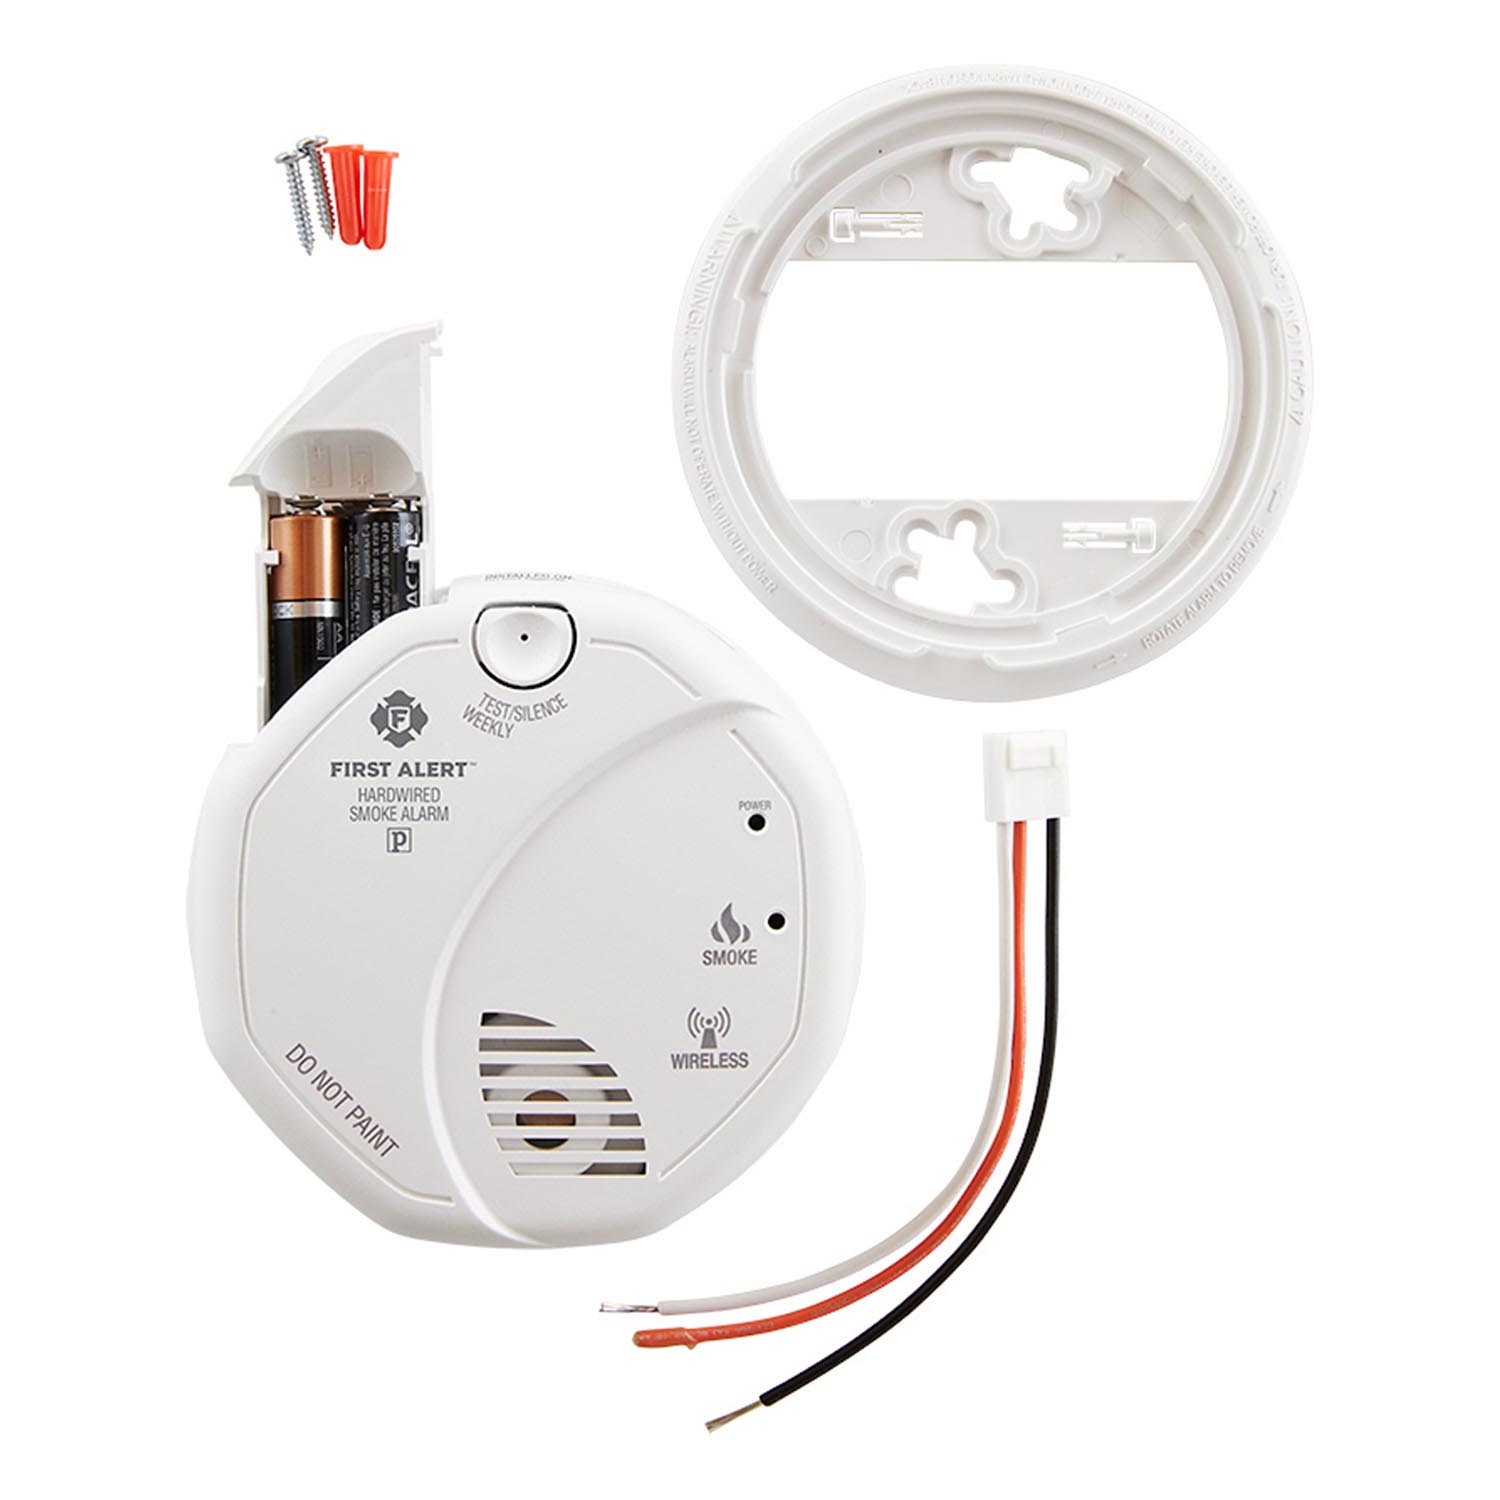 3x Interlinked Mains Smoke Alarm 1x Heat Alarm Detector Battery Back Up Linked 